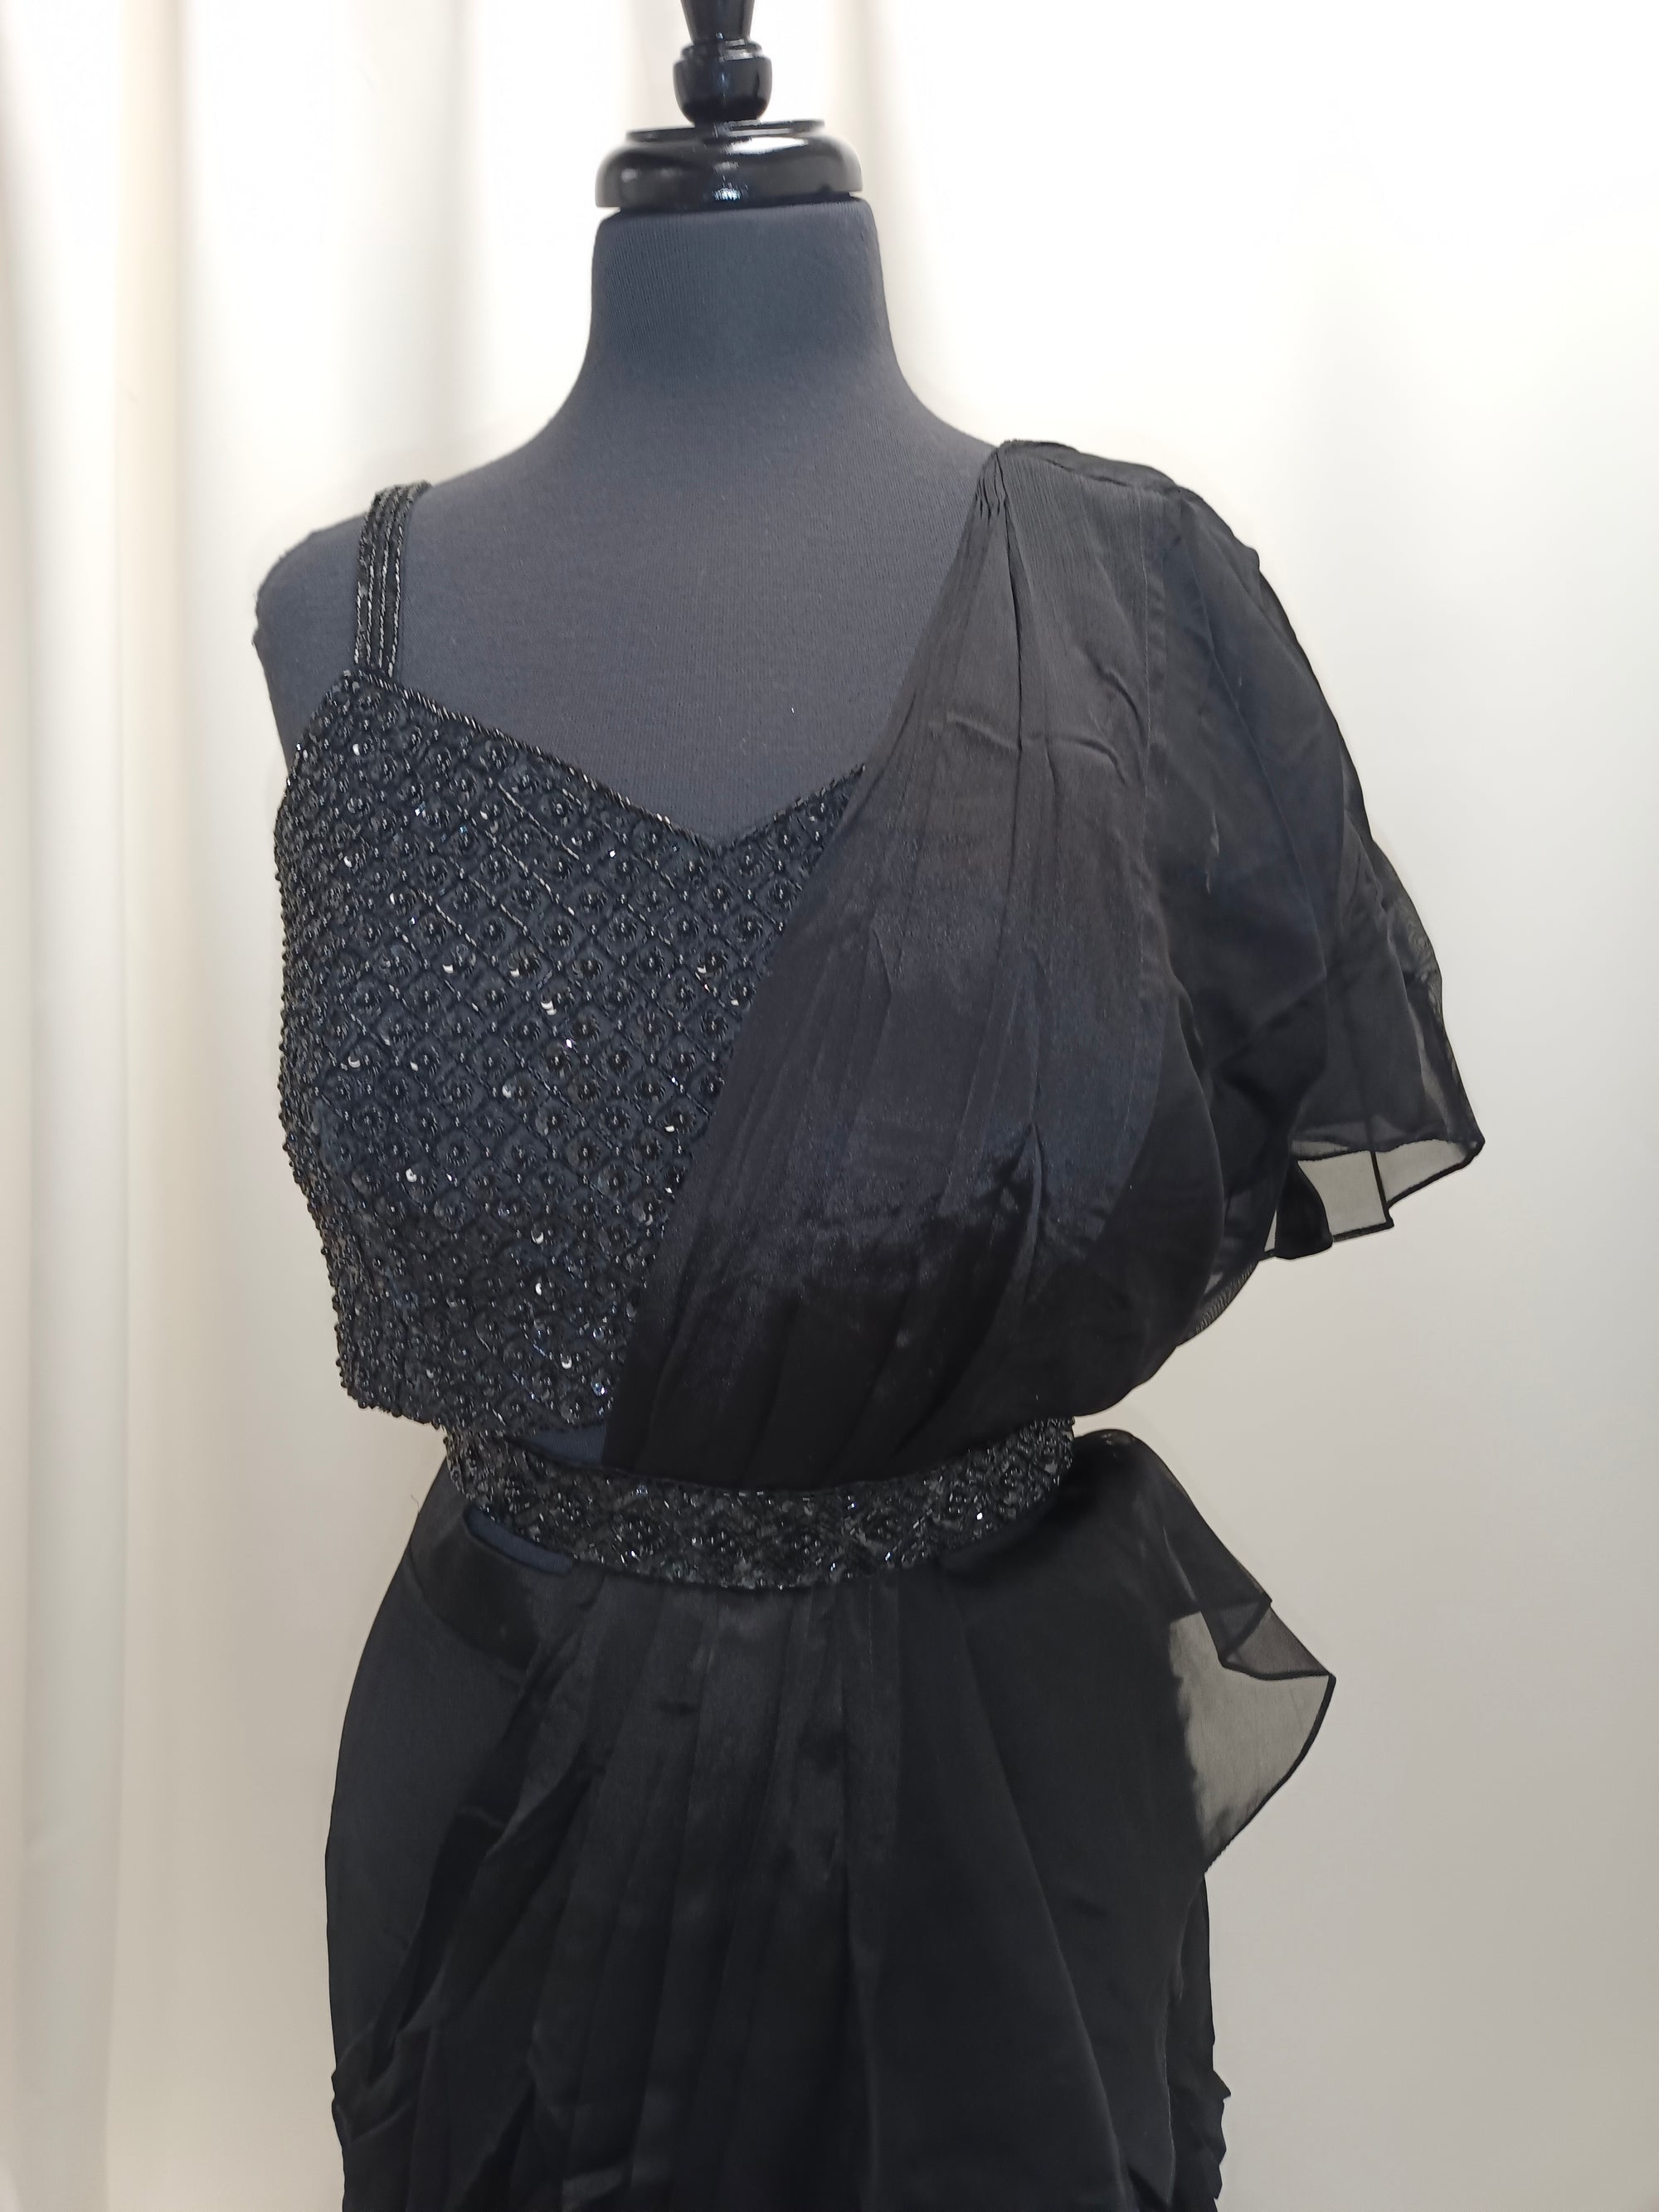 Black Drape saree with beaded blouse